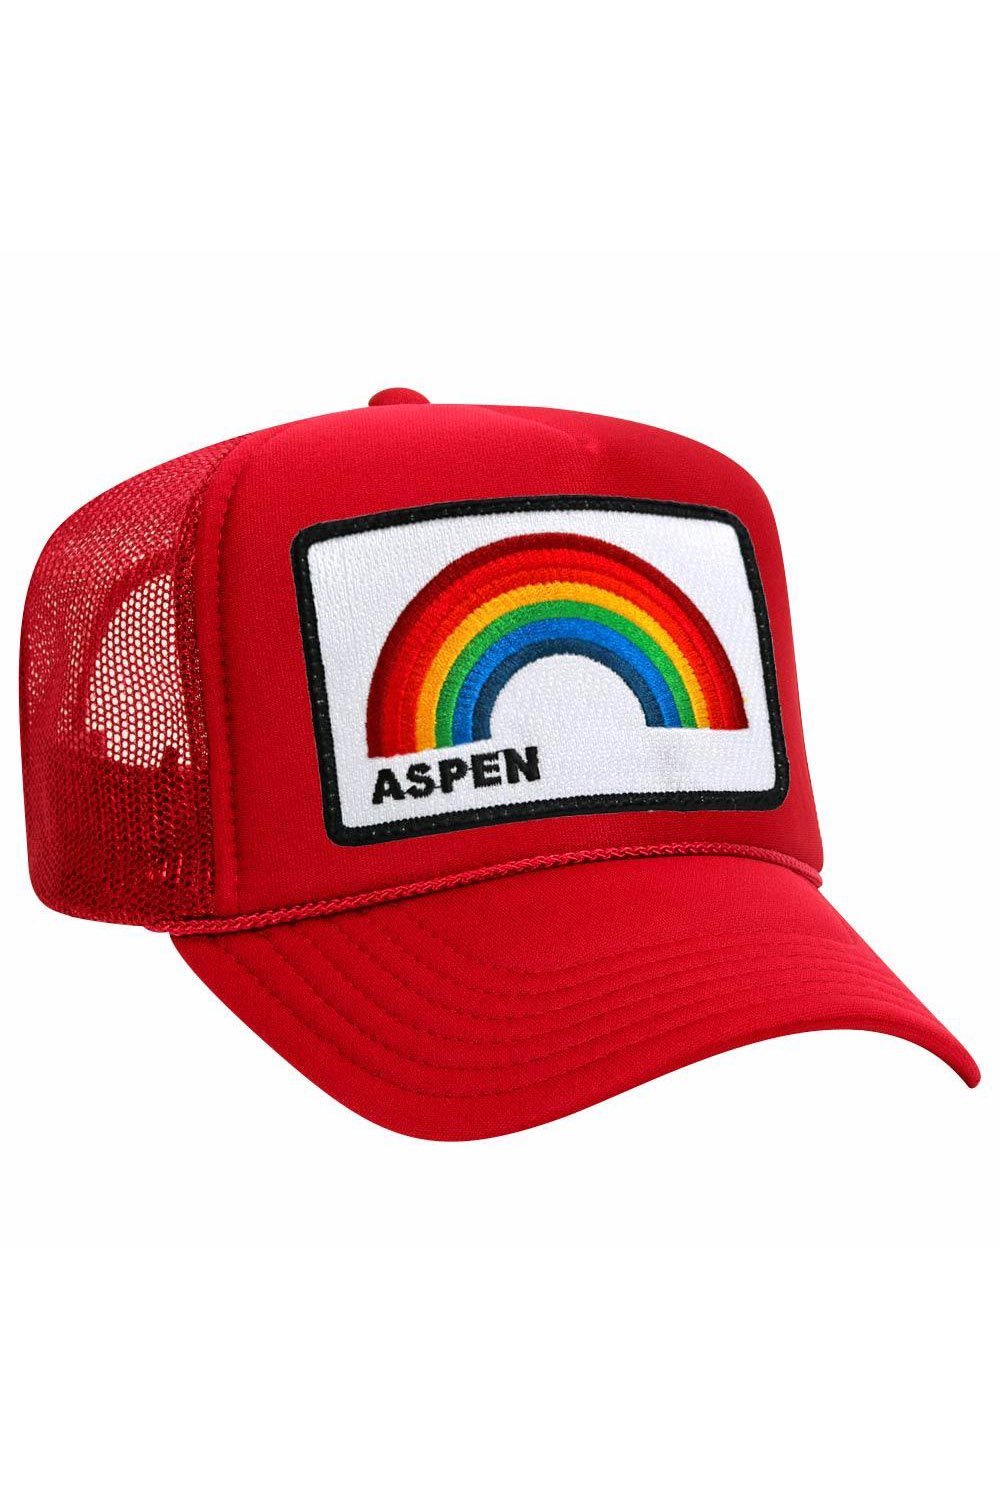 ASPEN RAINBOW TRUCKER HAT HATS Aviator Nation OS RED 